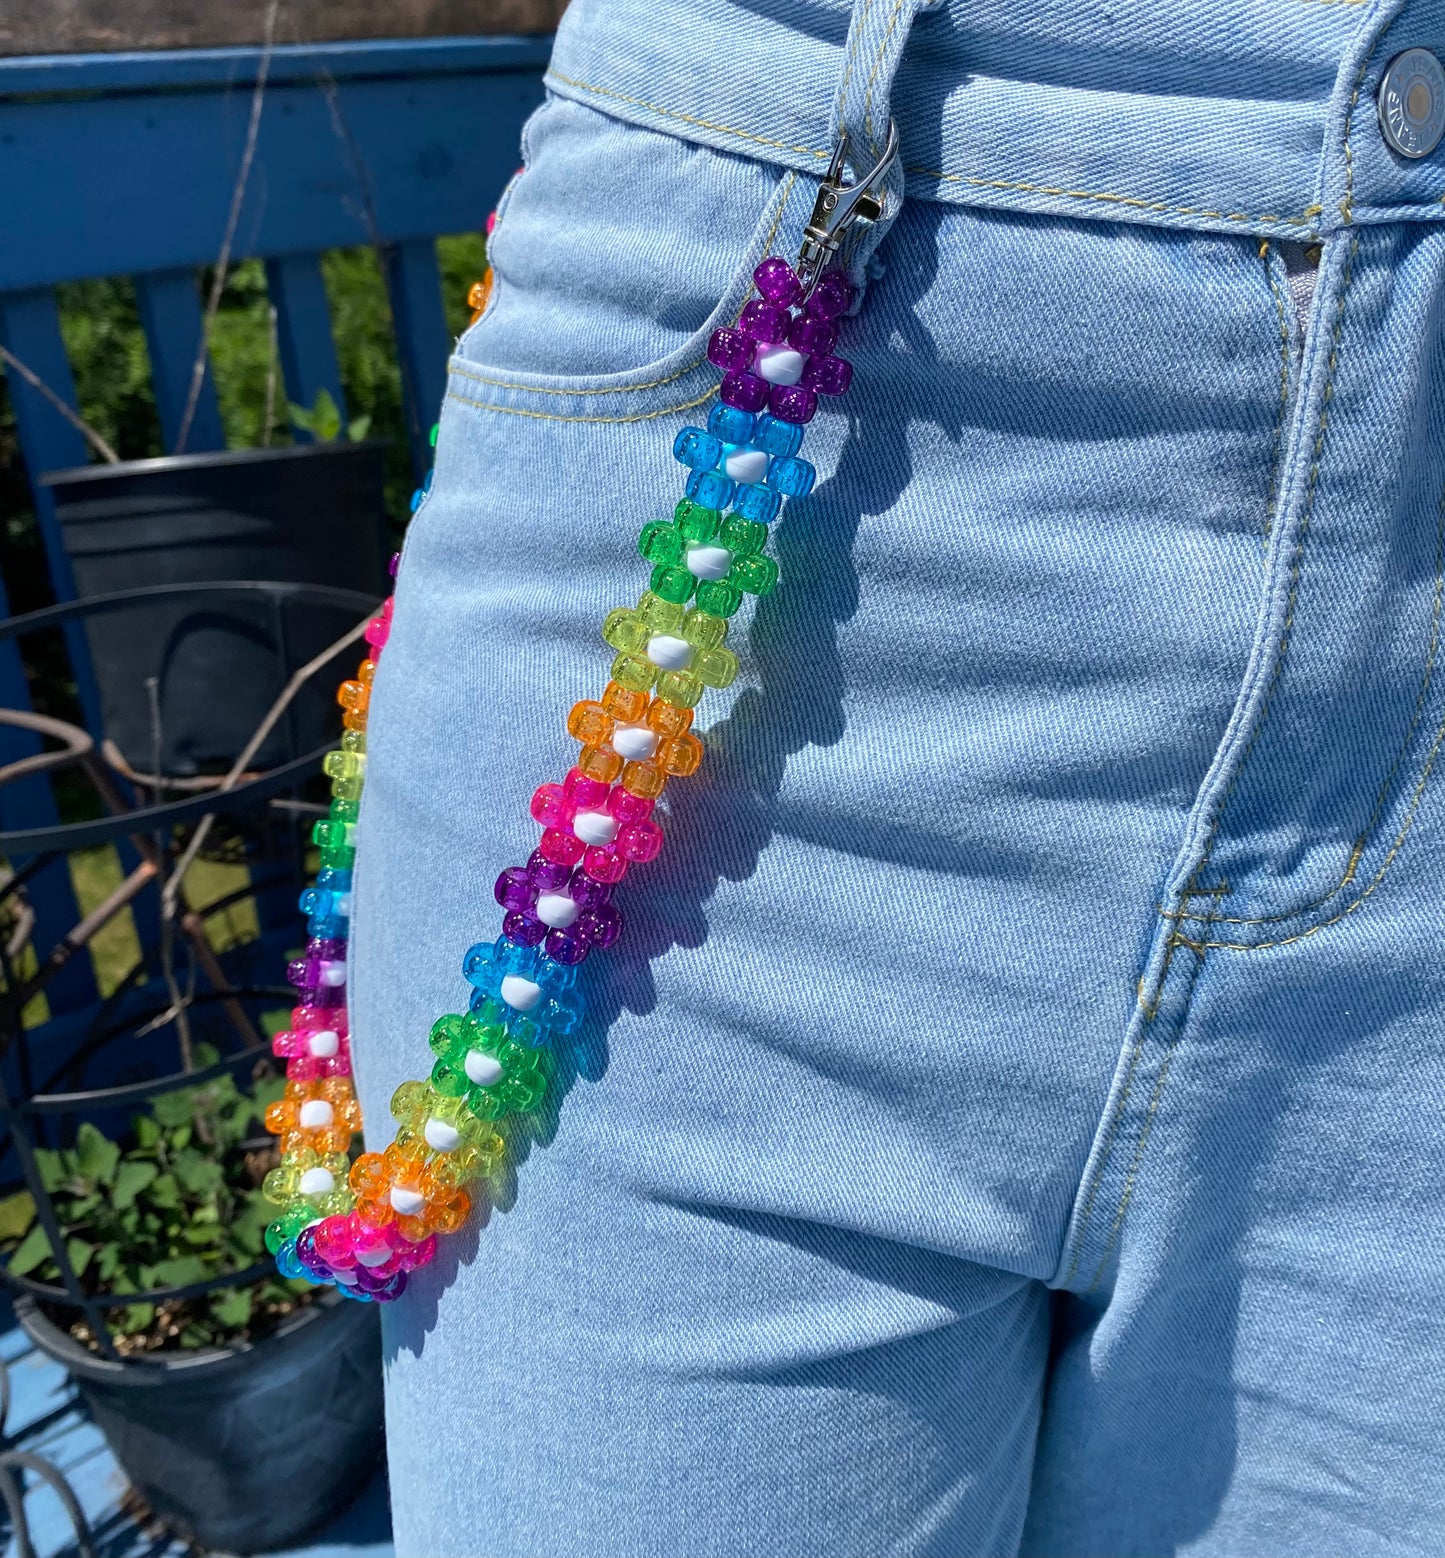 Sparkle Rainbow Kandi Belt Chain